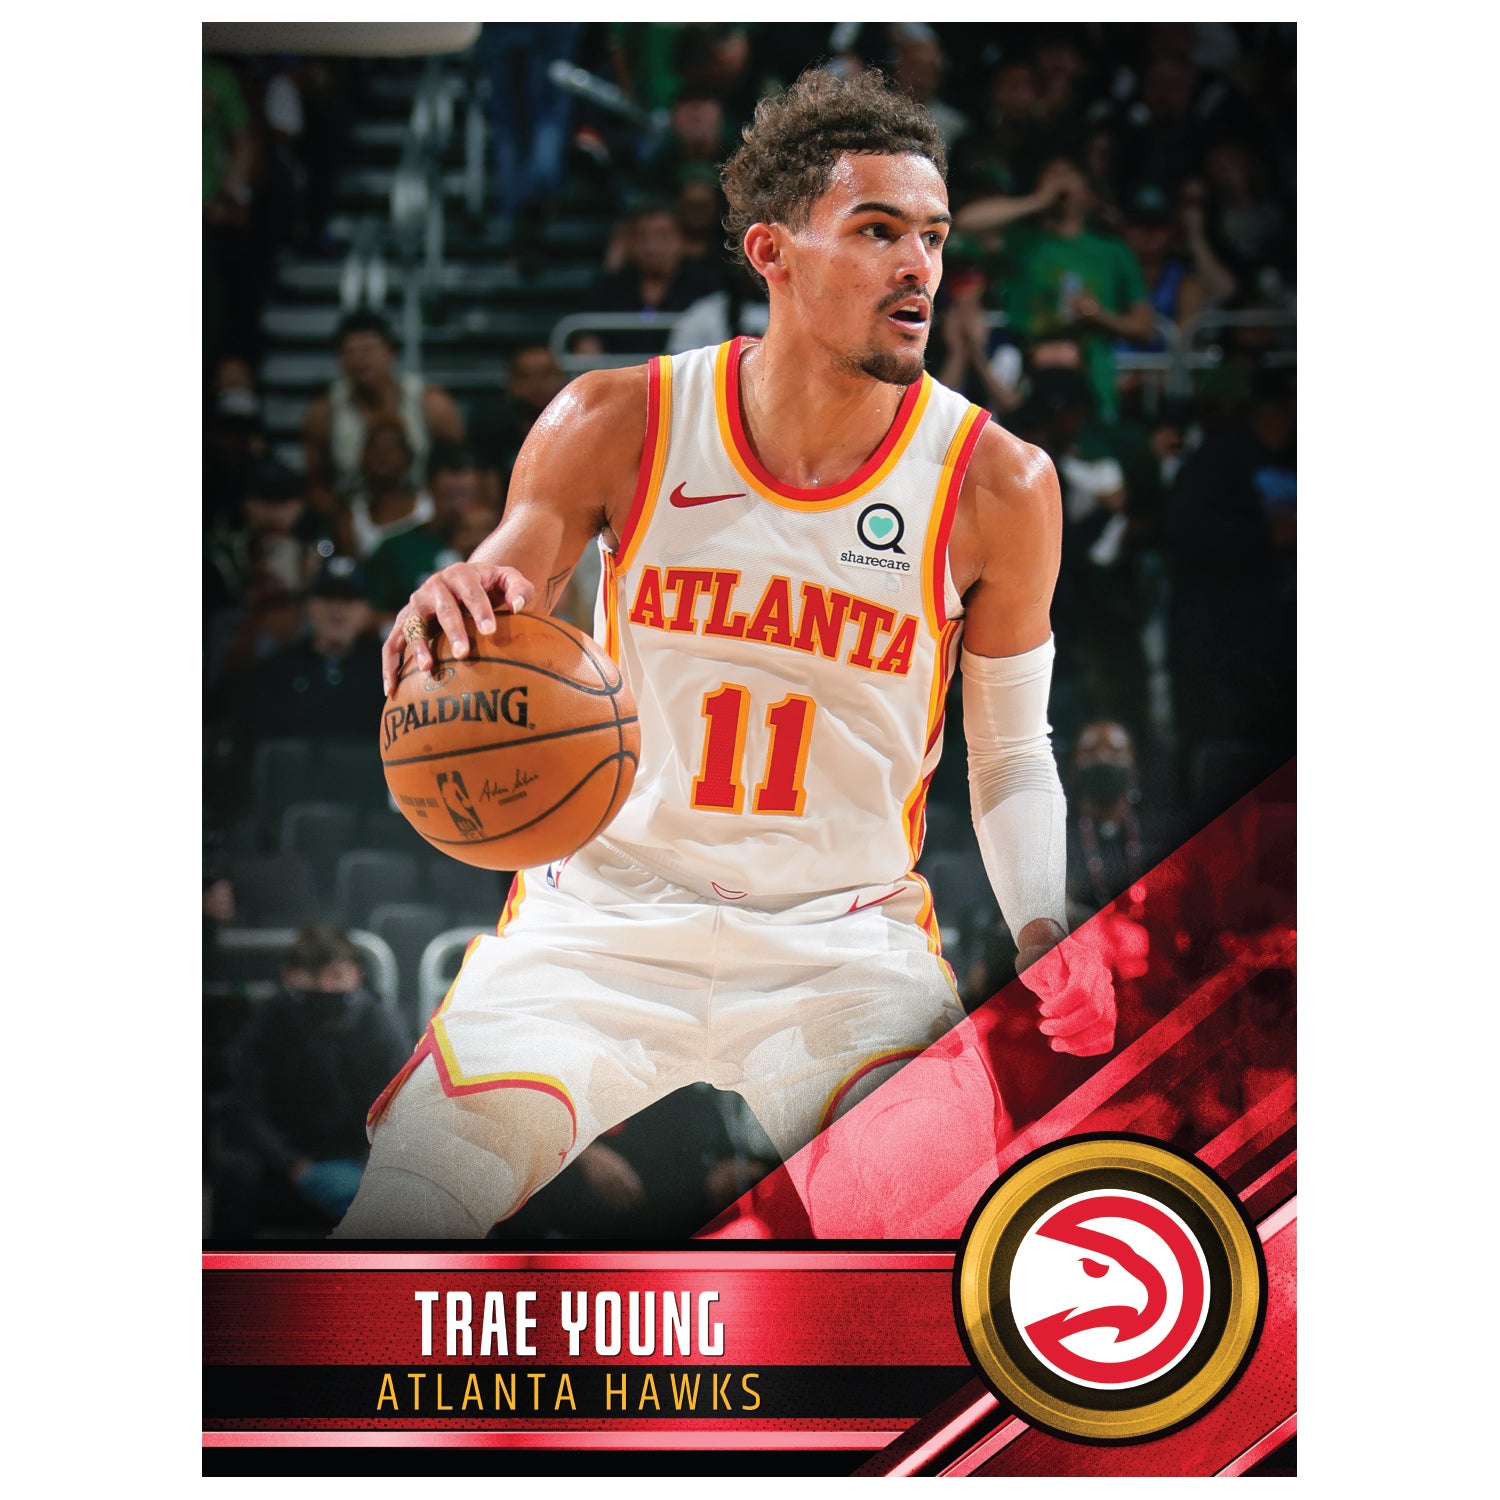 Trae Young #11  Atlanta Hawks on Behance